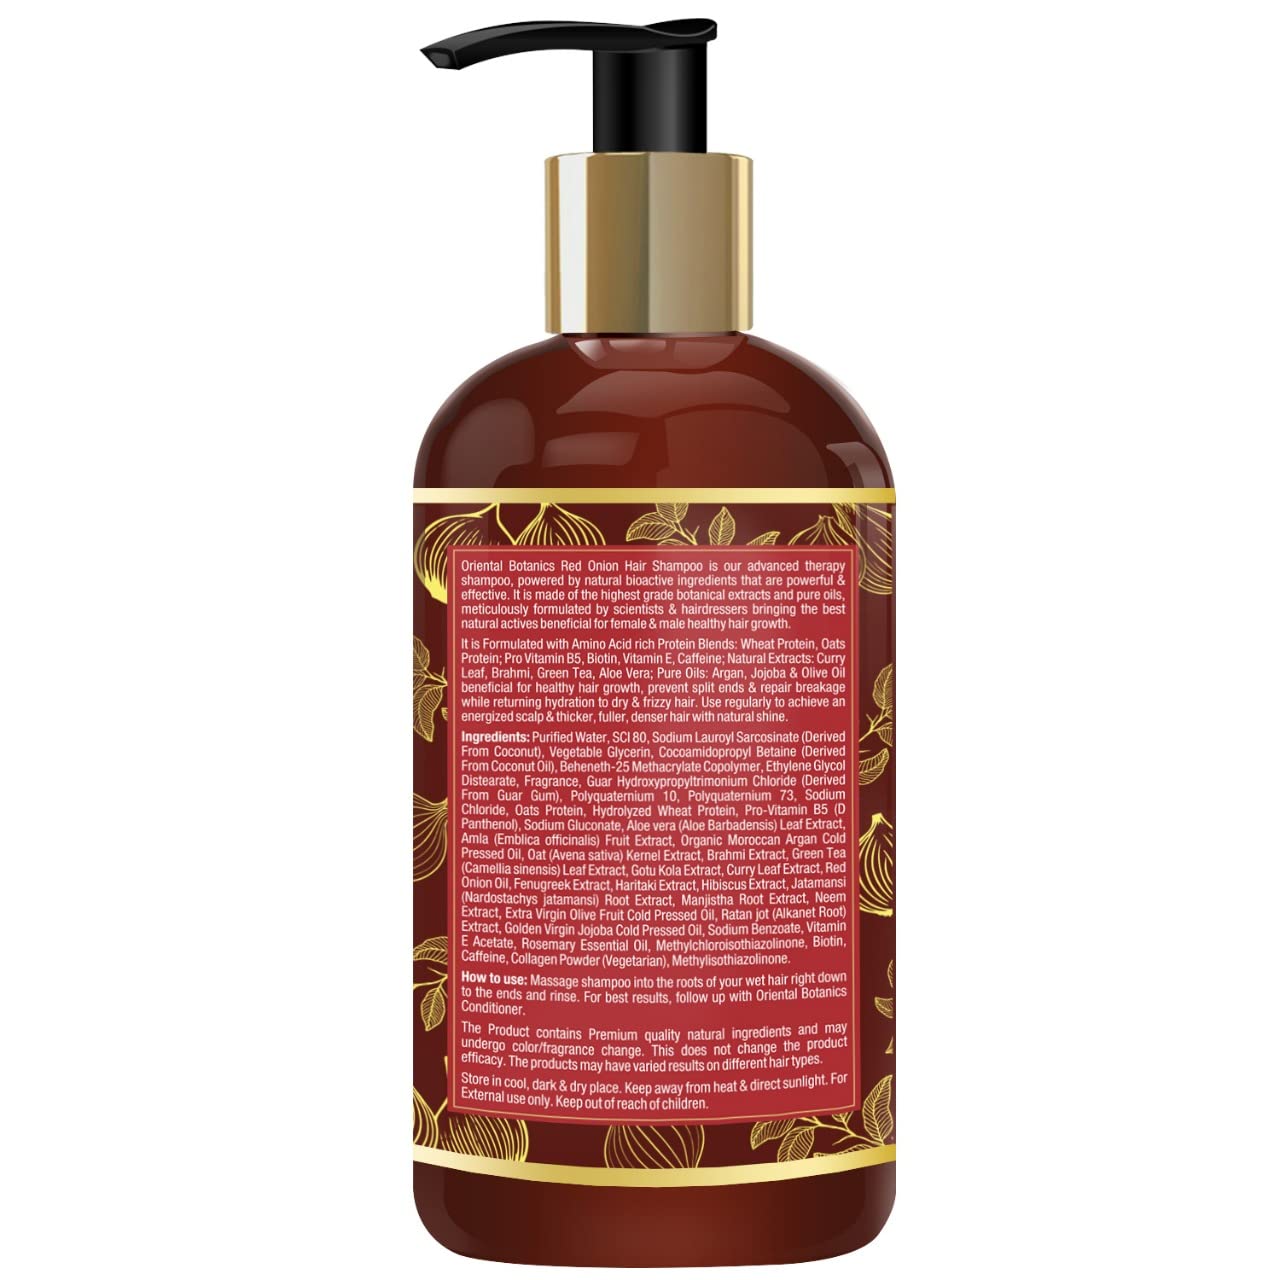 Oriental Botanics Red Onion Hair Shampoo, With Red Onion Oil, 27 Botanical Actives, Biotin, Argan Oil, Caffeine, Protein, Controls Hair Loss & Supports Healthy Hair Growth, 300 ml